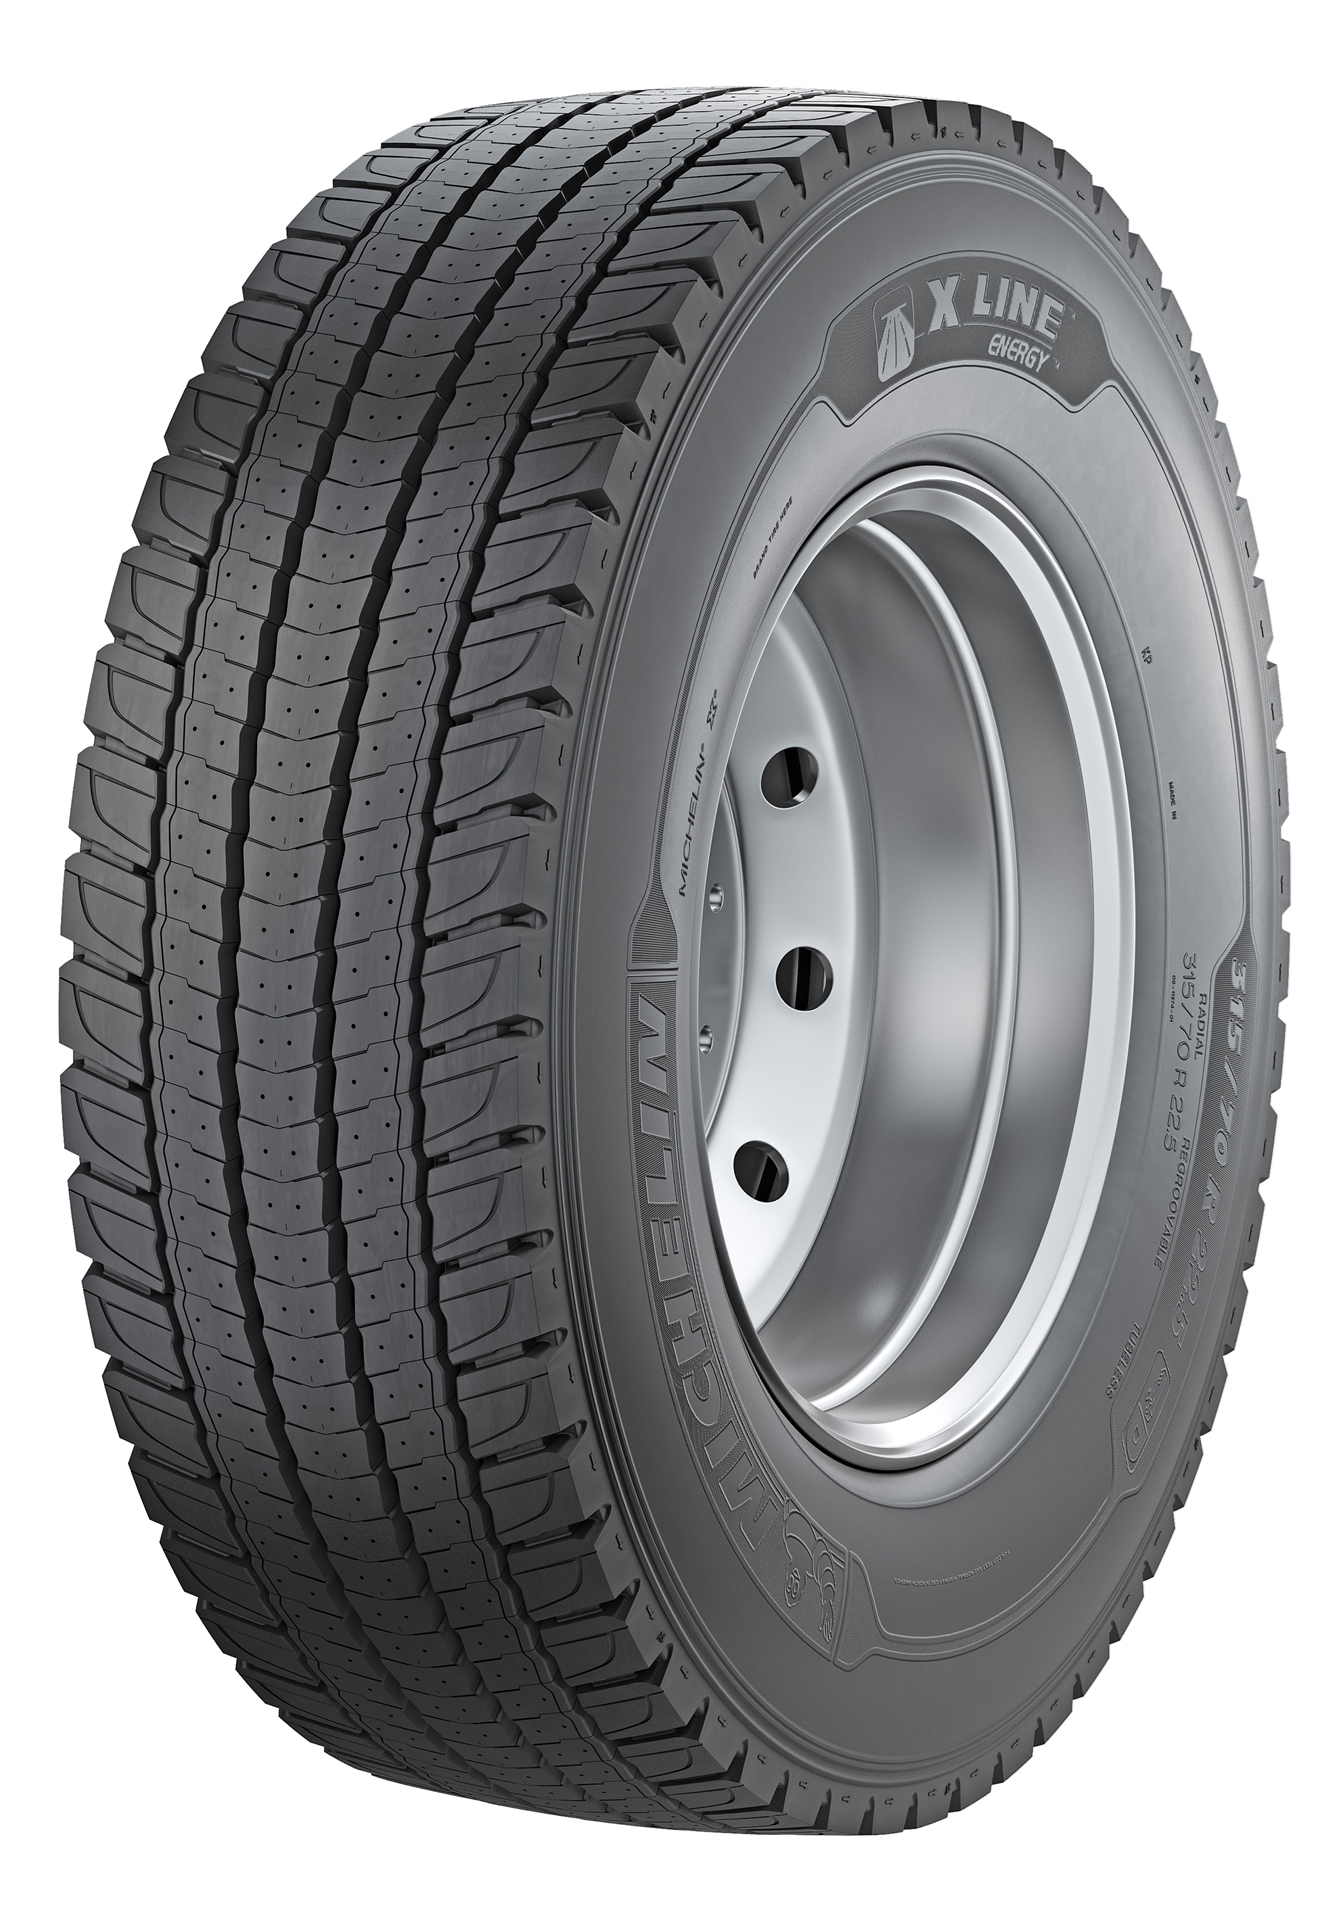 Gomme Nuove Michelin 315/80 R22.5 156/150L X LINE ENERGY D M+S (8.00mm) pneumatici nuovi Estivo